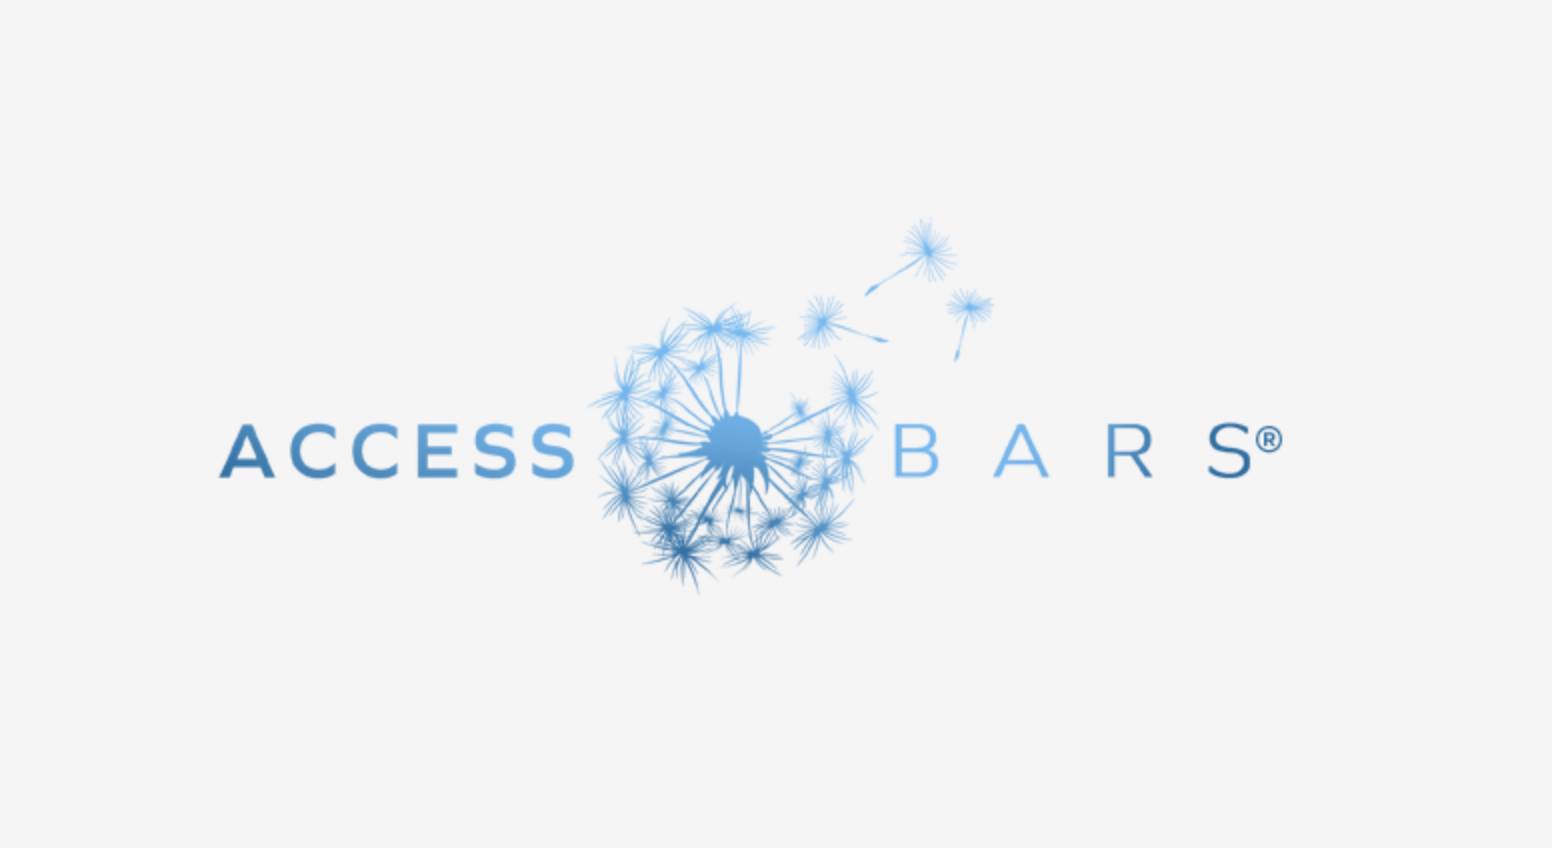 Session access. Access Bars логотип. Сеанс access Bars. Фасилитатор аксесс. Сессия access Bars.